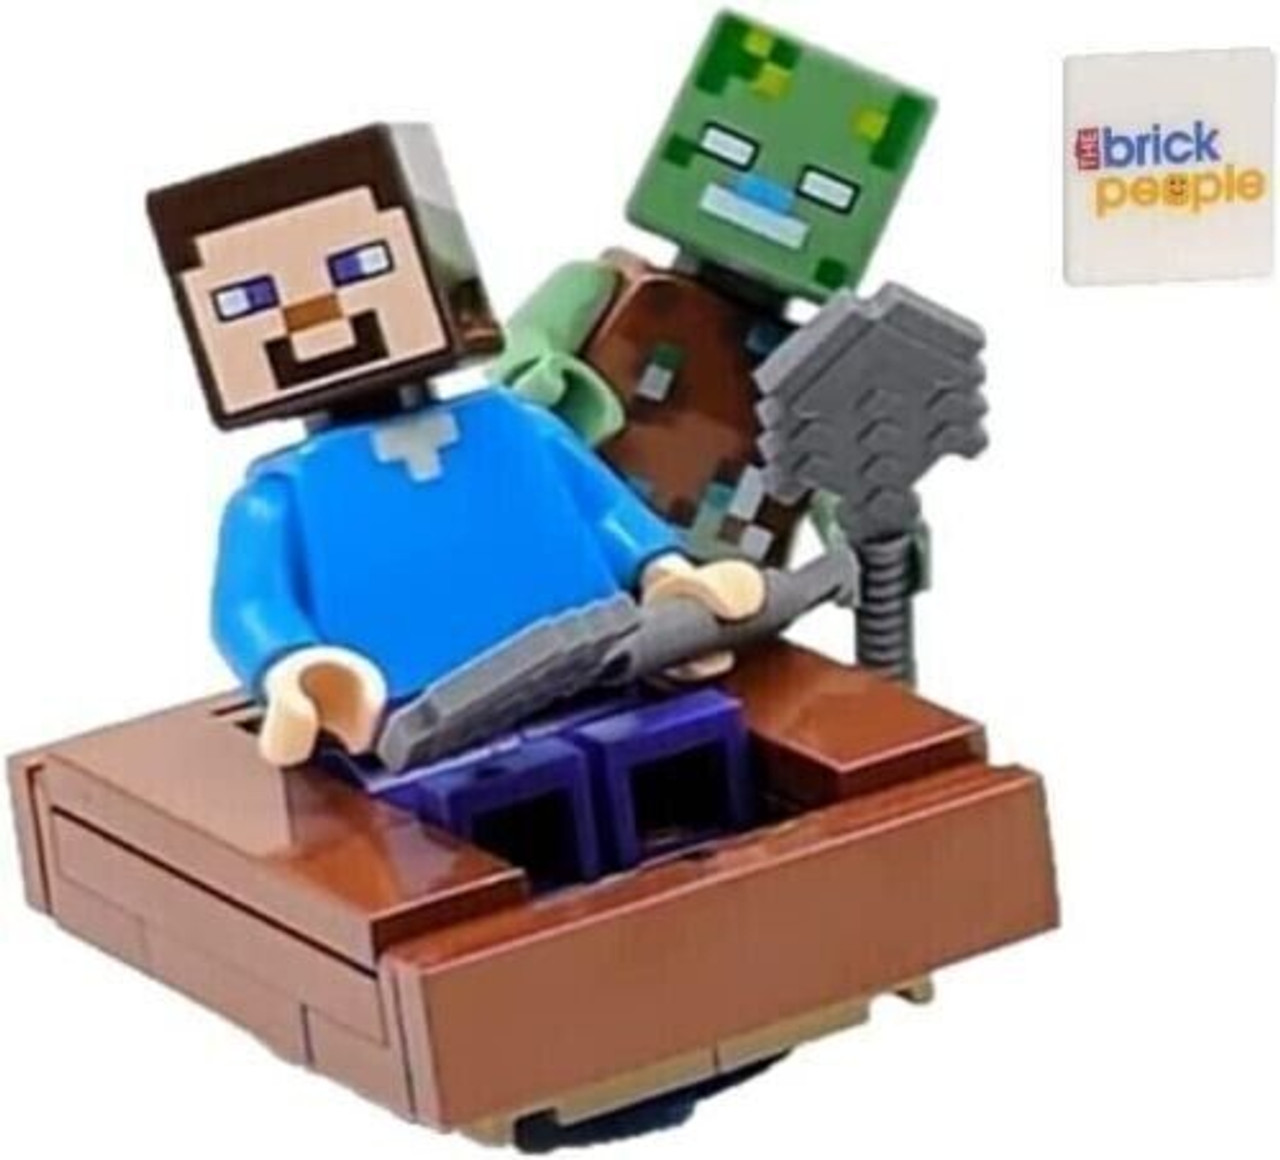 Lego Minecraft™ - Brick Creation